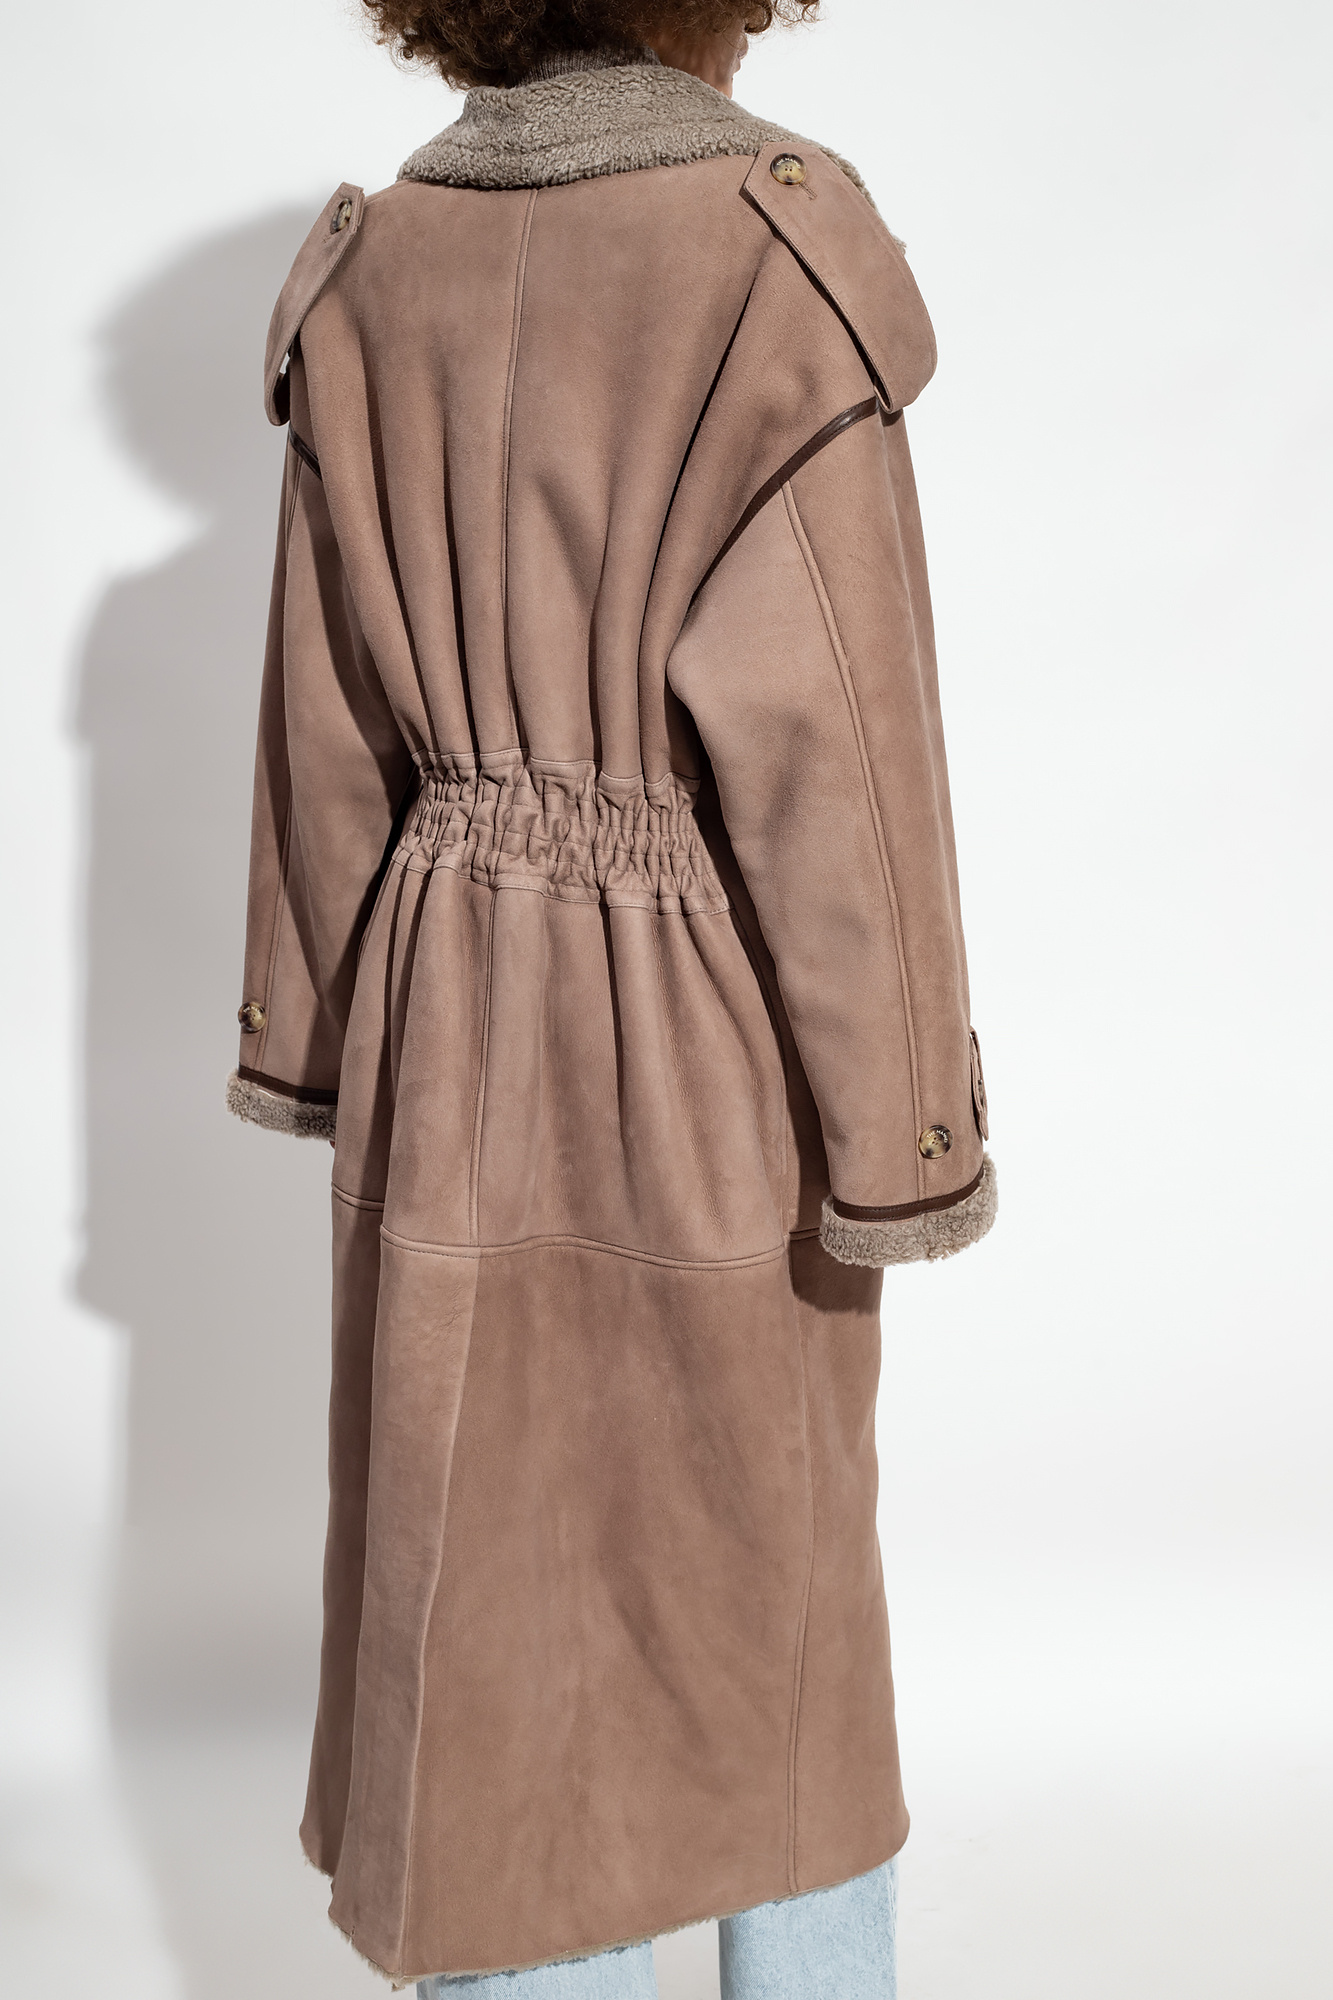 The Mannei ‘Jordan’ long shearling jacket